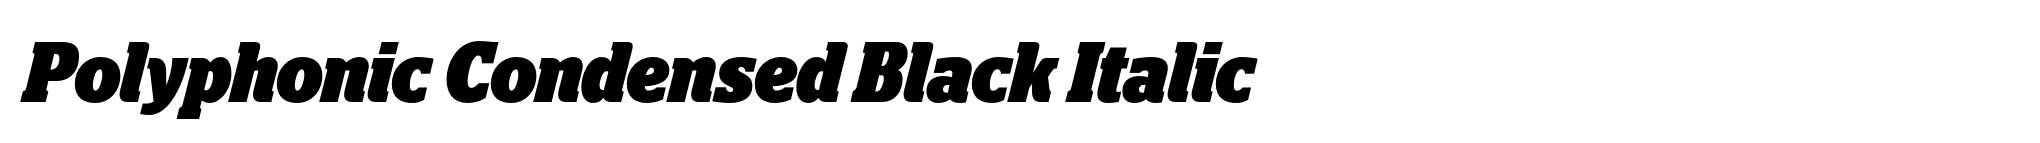 Polyphonic Condensed Black Italic image